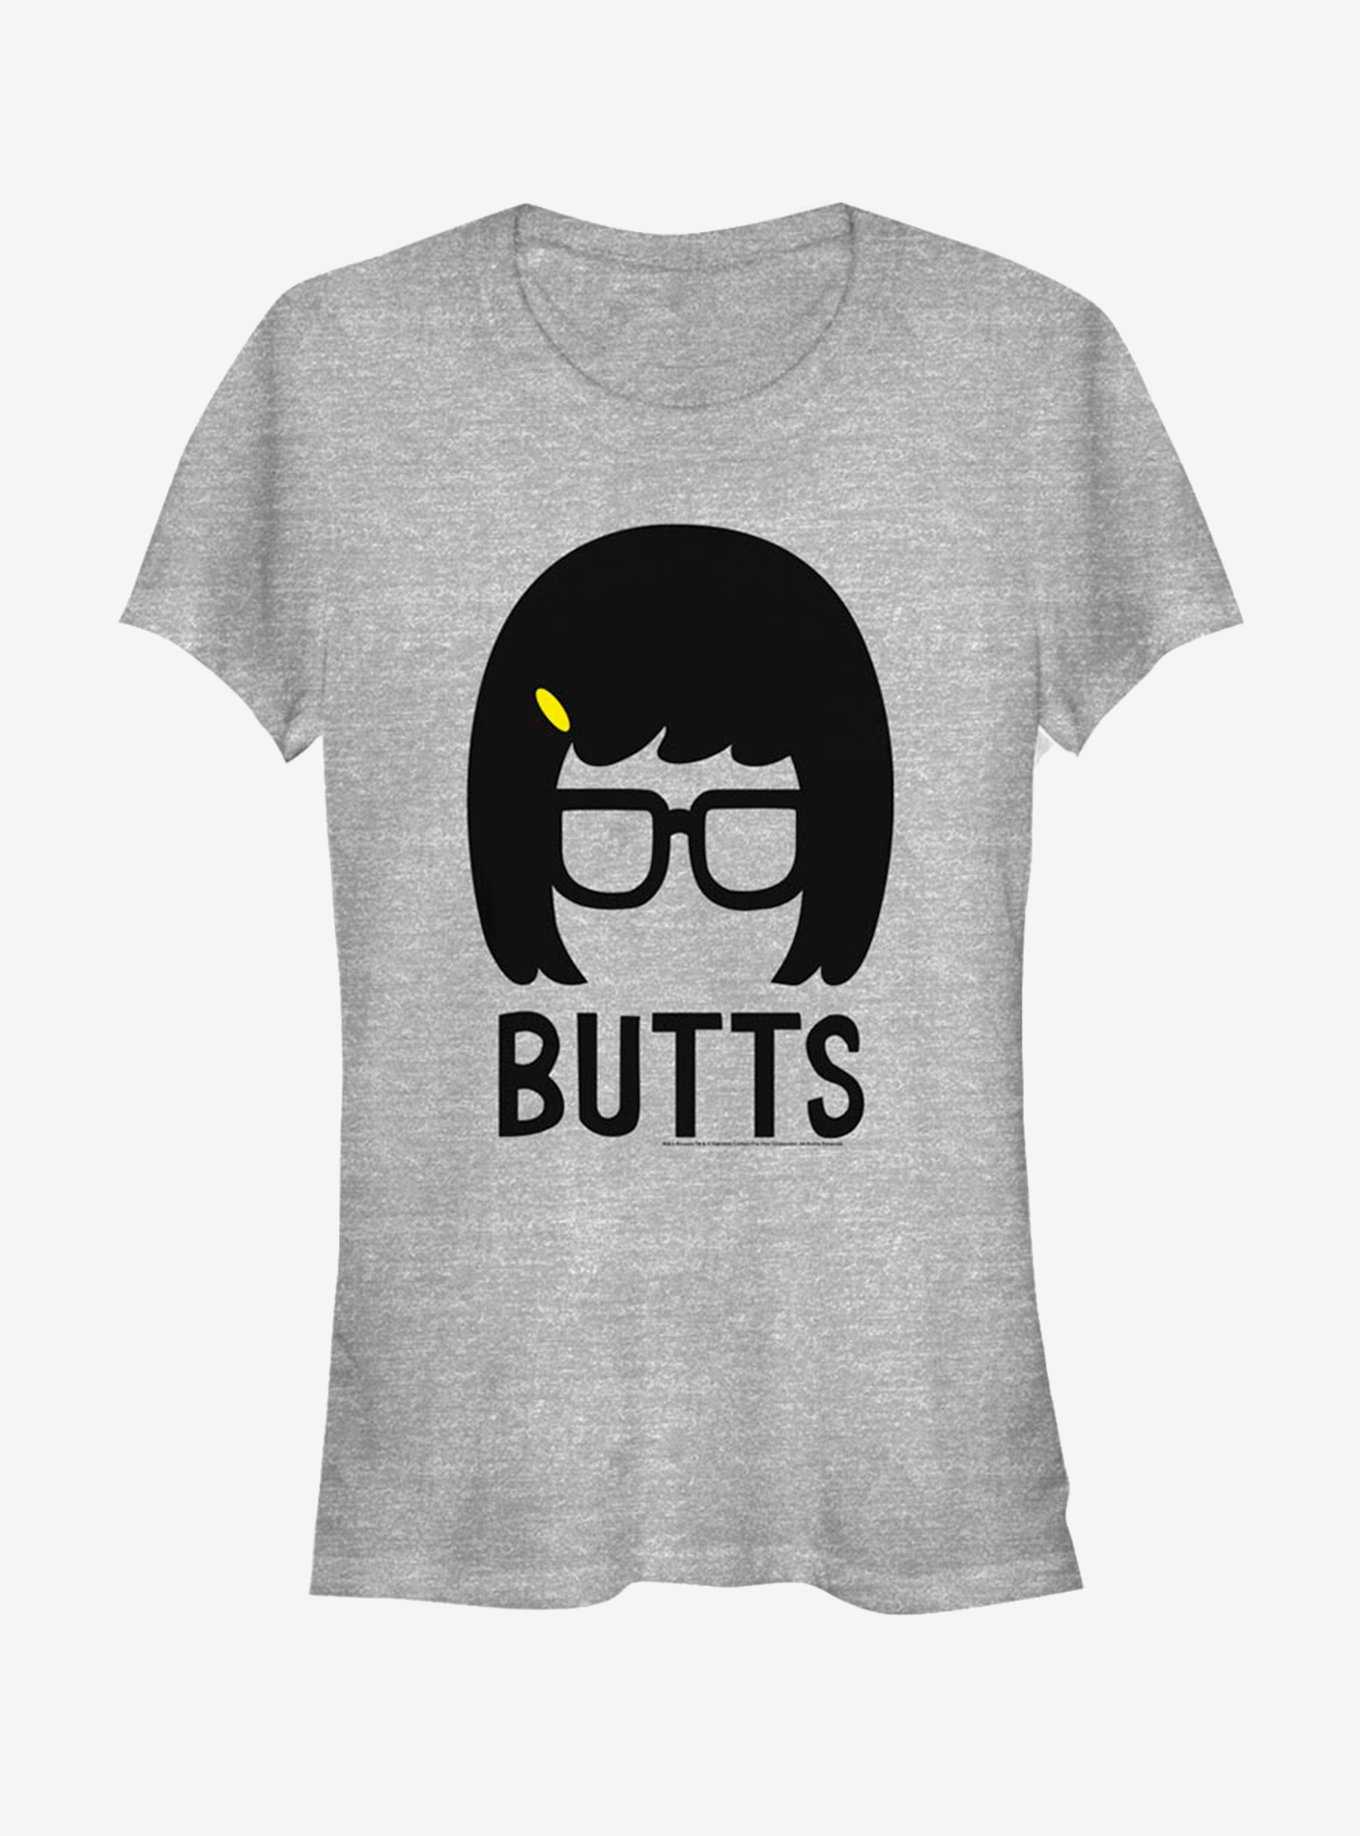 Bob's Burgers Tina Belcher Butts Girls T-Shirt, , hi-res